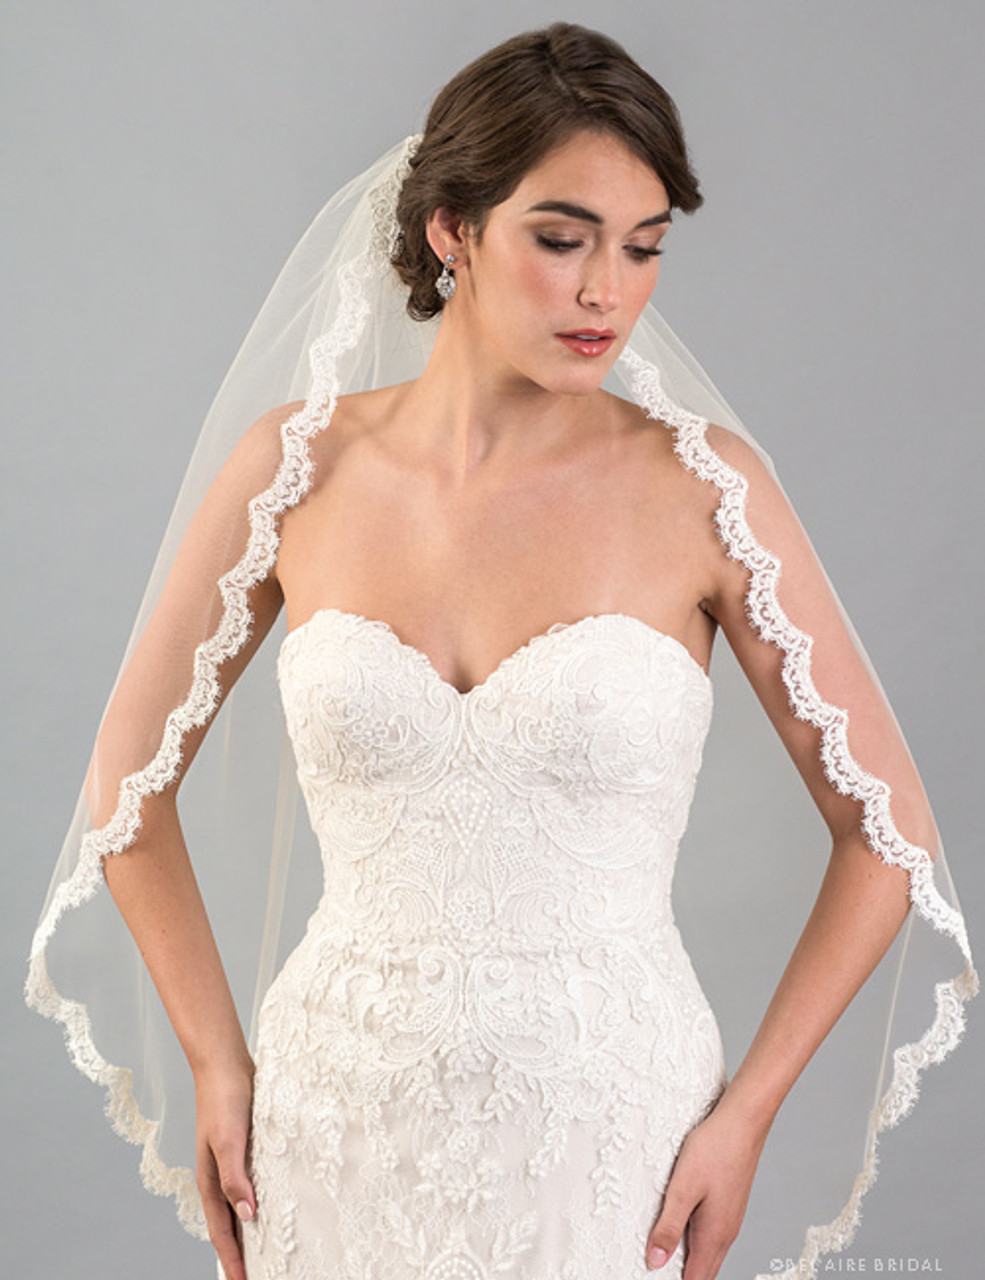 AMBRA, Italian Lace Wedding Veil